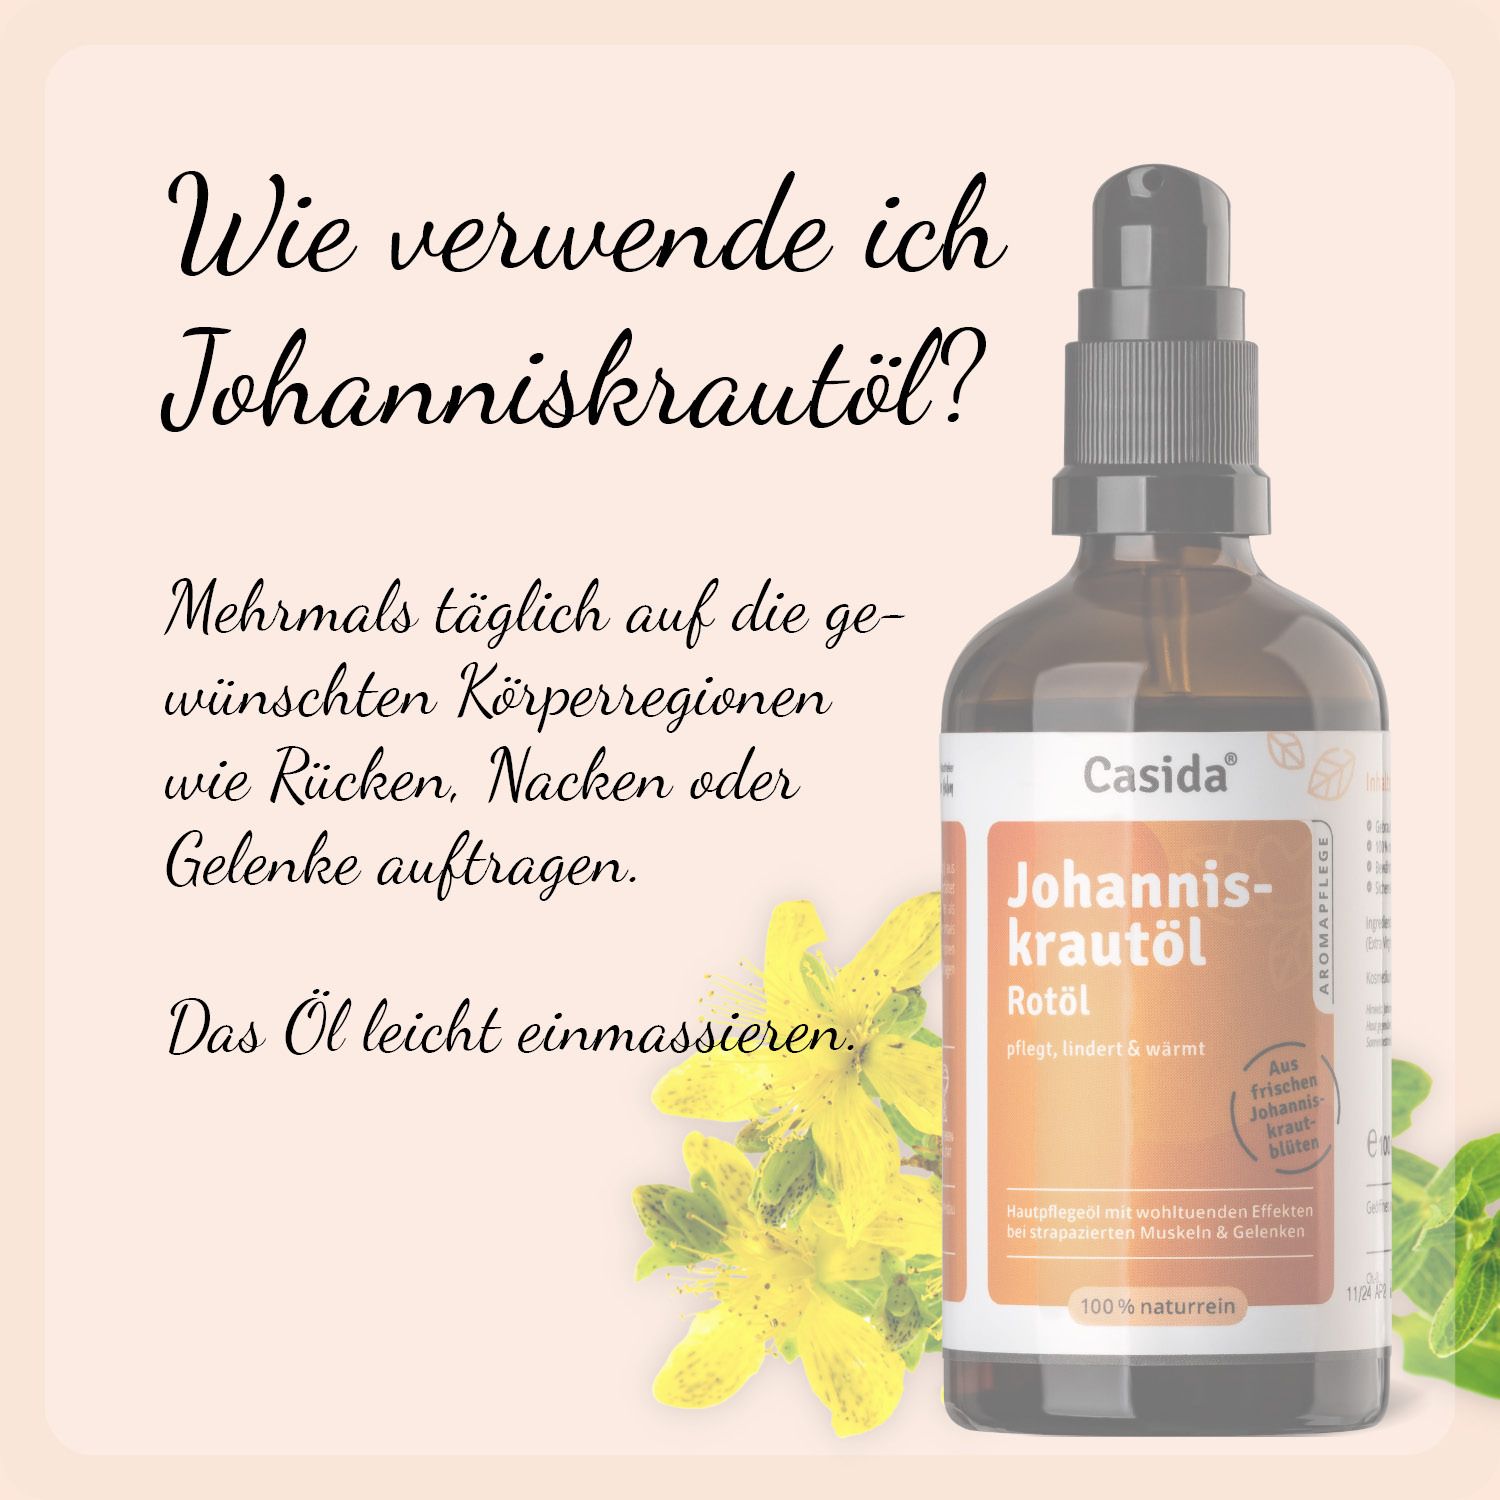 Casida® Johanniskraut Rotöl